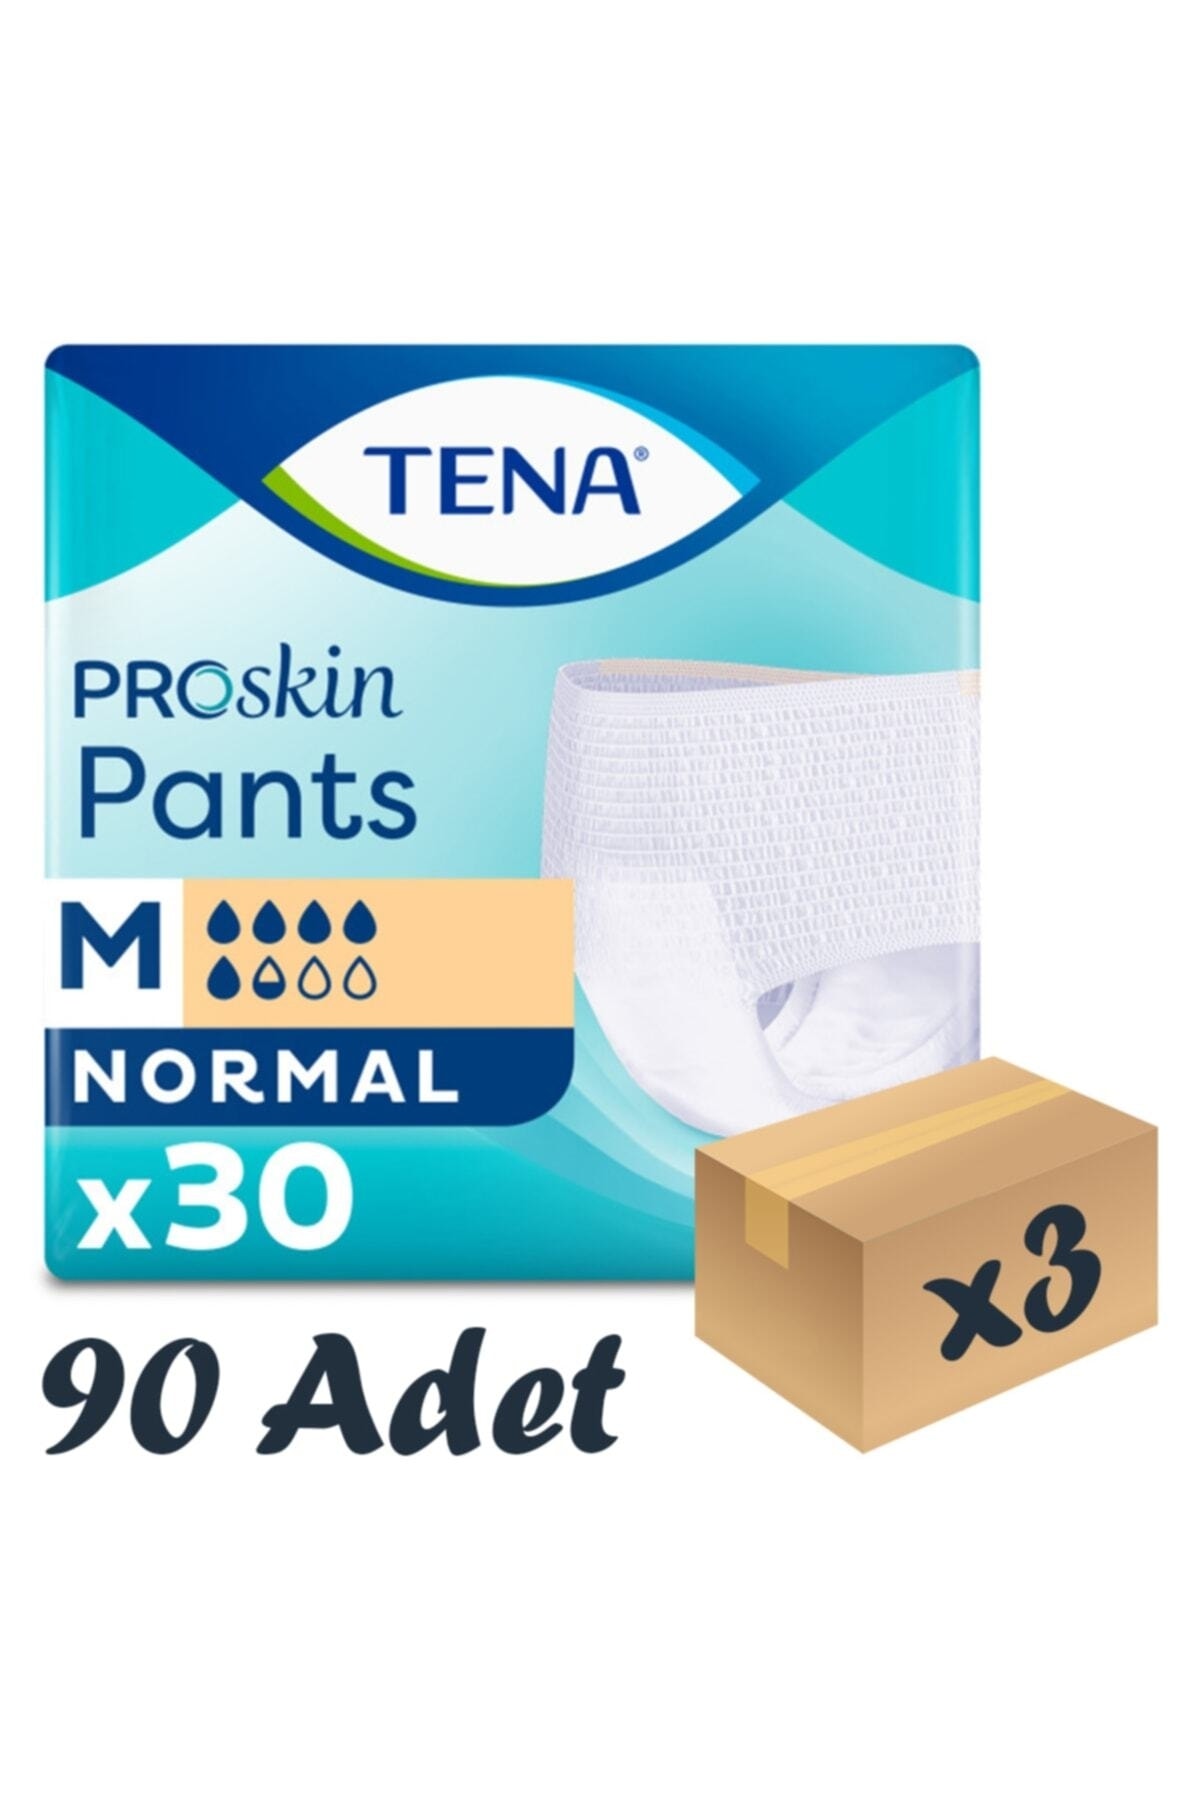 TENA Proskin Pants Normal Emici Külot, Orta Boy m 5.5 Damla 30'lu 3 Paket 90 Adet